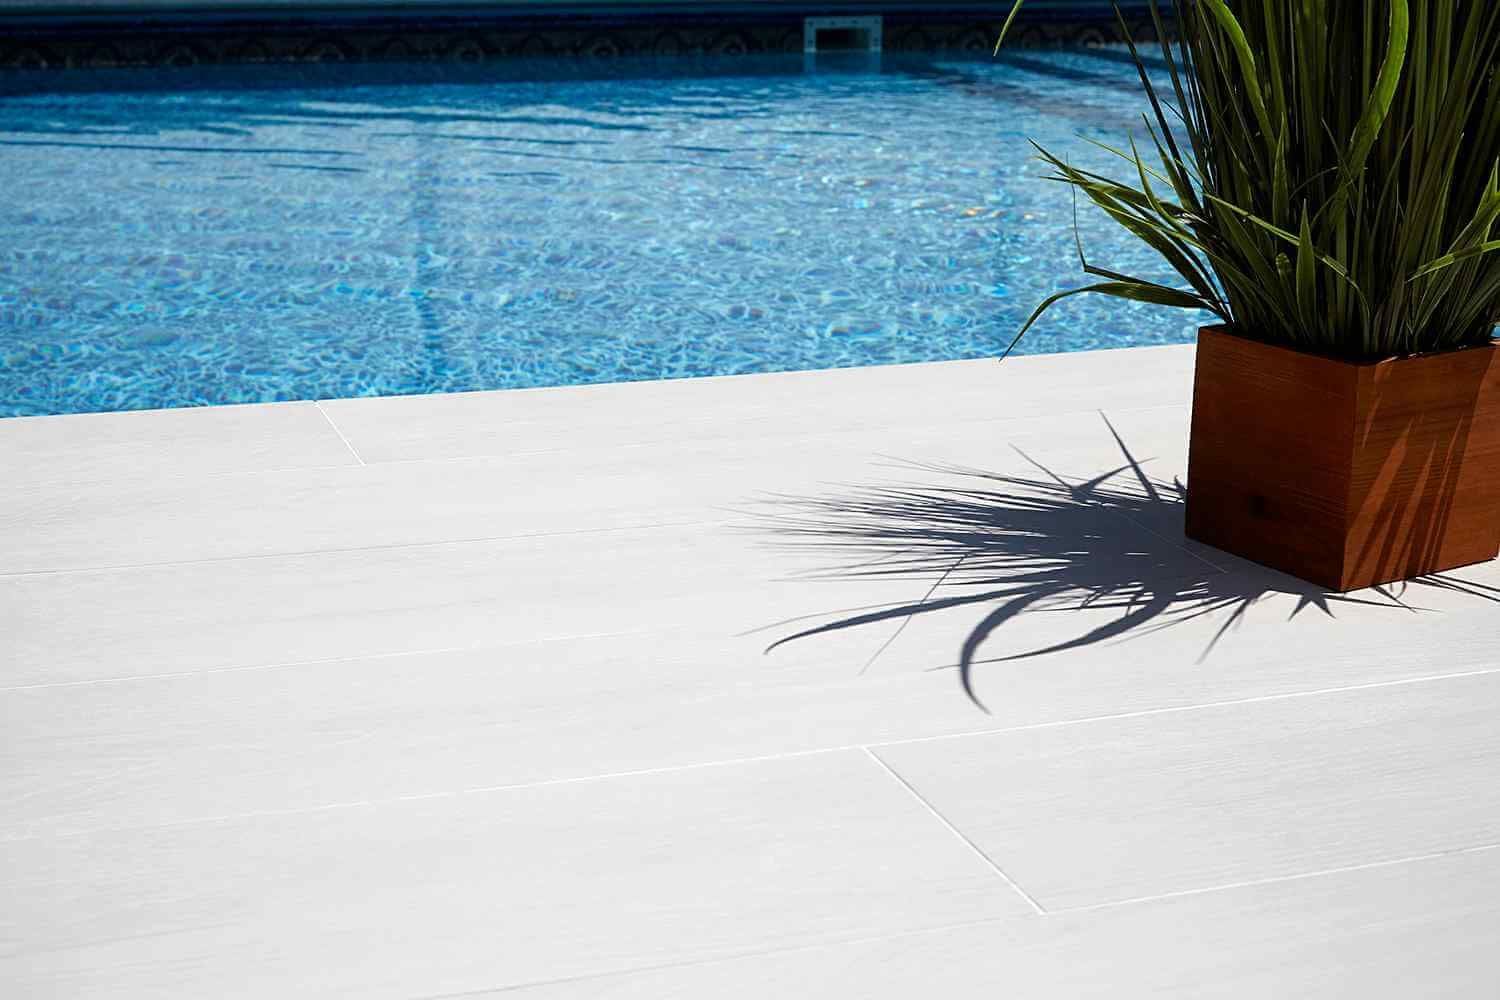 Sun City, AZ stamped concrete pool deck done by West Valley Concrete pros